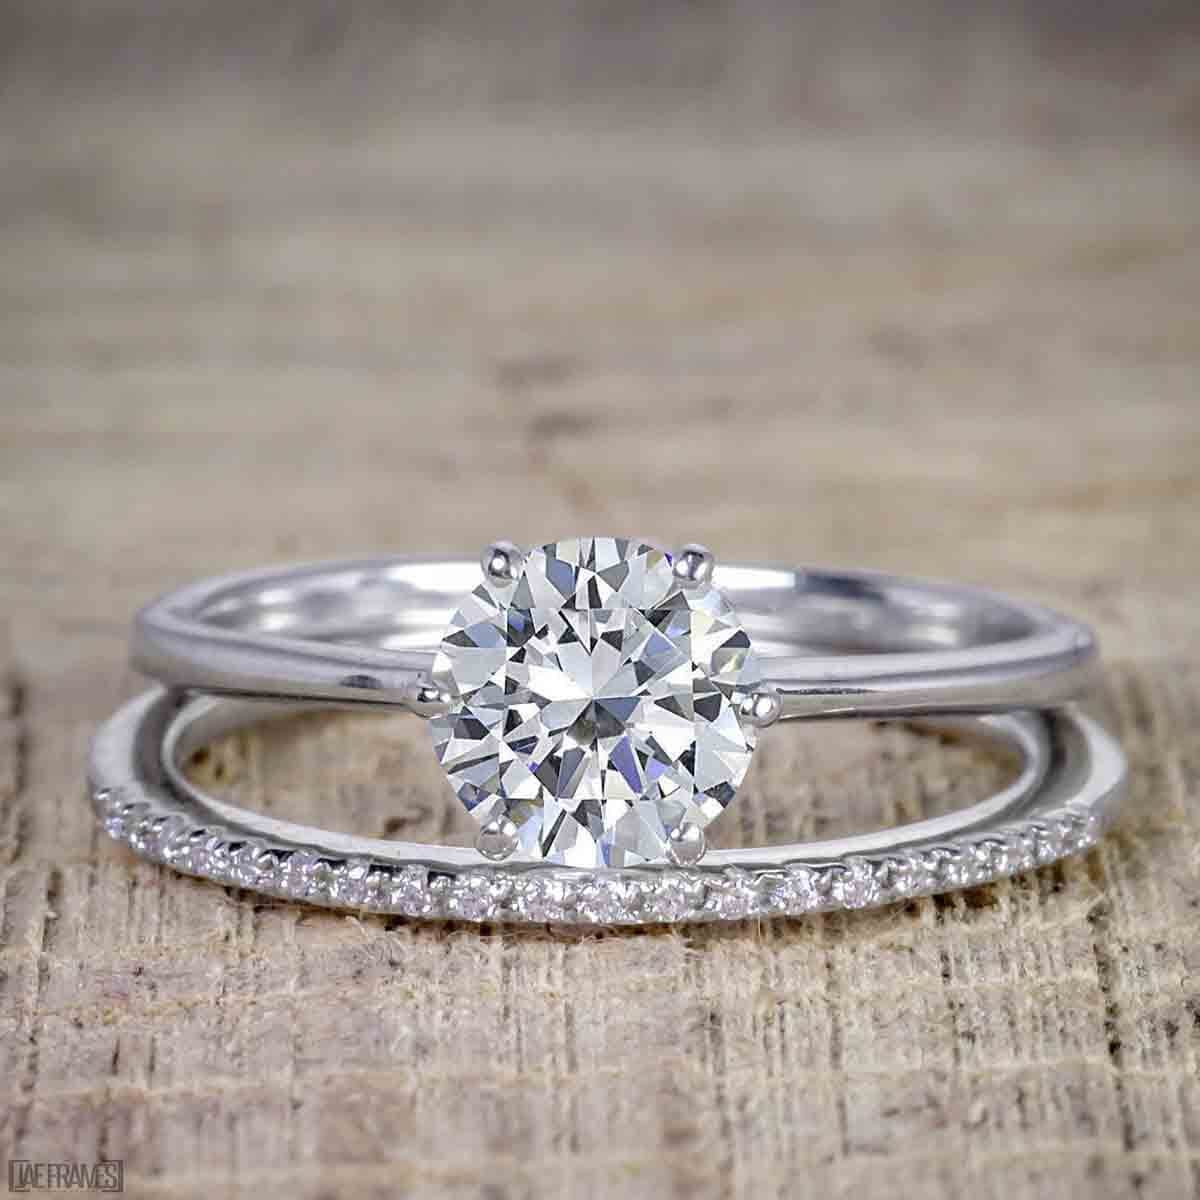 JeenJewels 1.50 ct Moissanite Diamond Wedding Ring Set with 18k Gold Plating